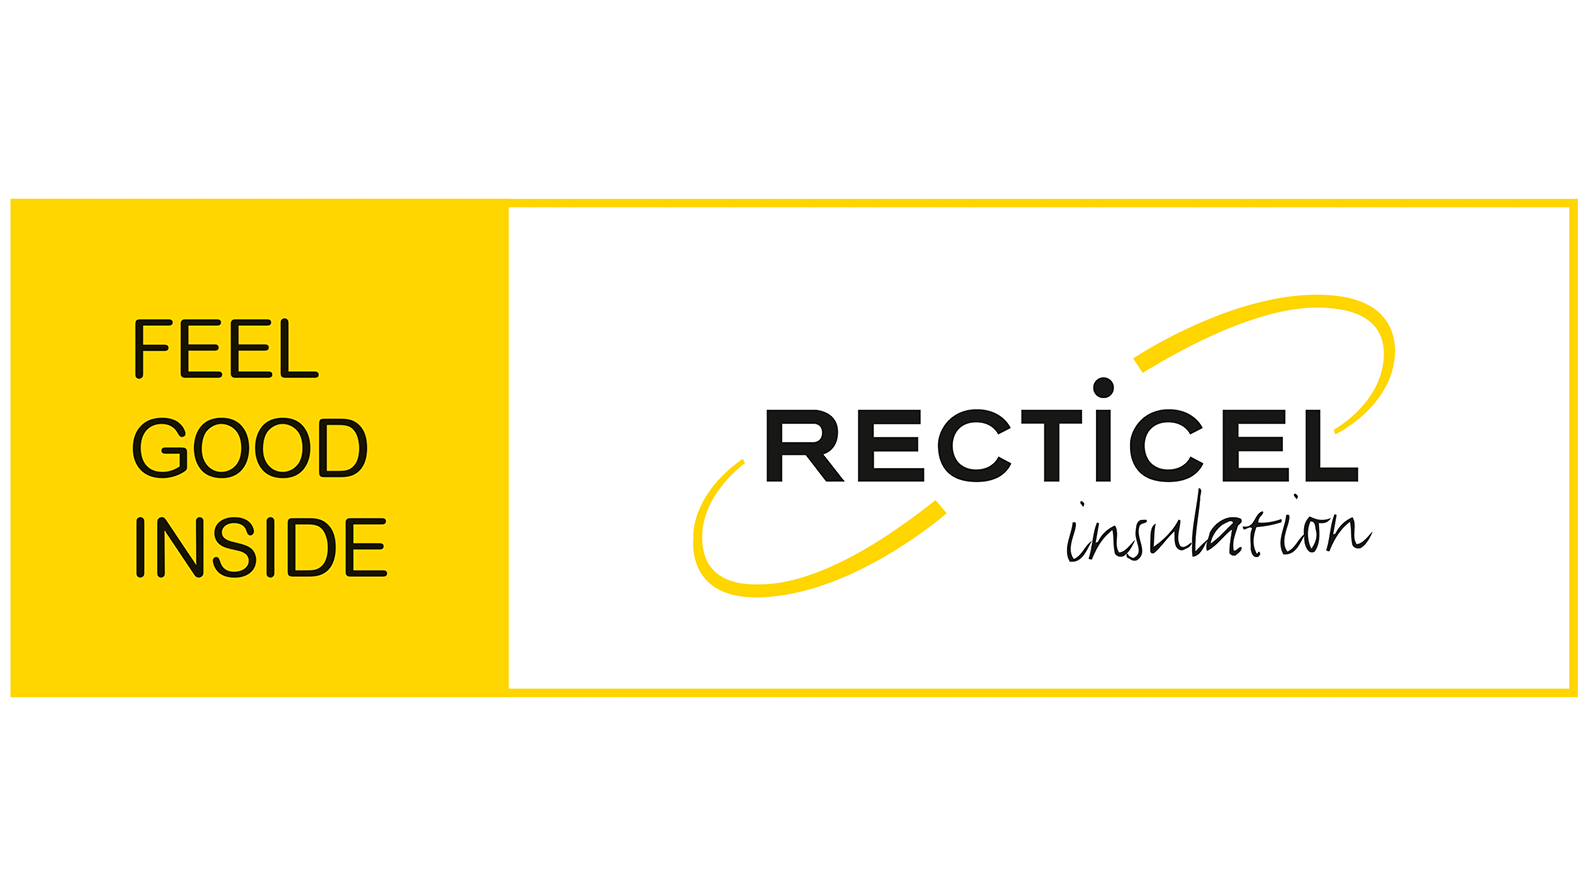 logo recticel